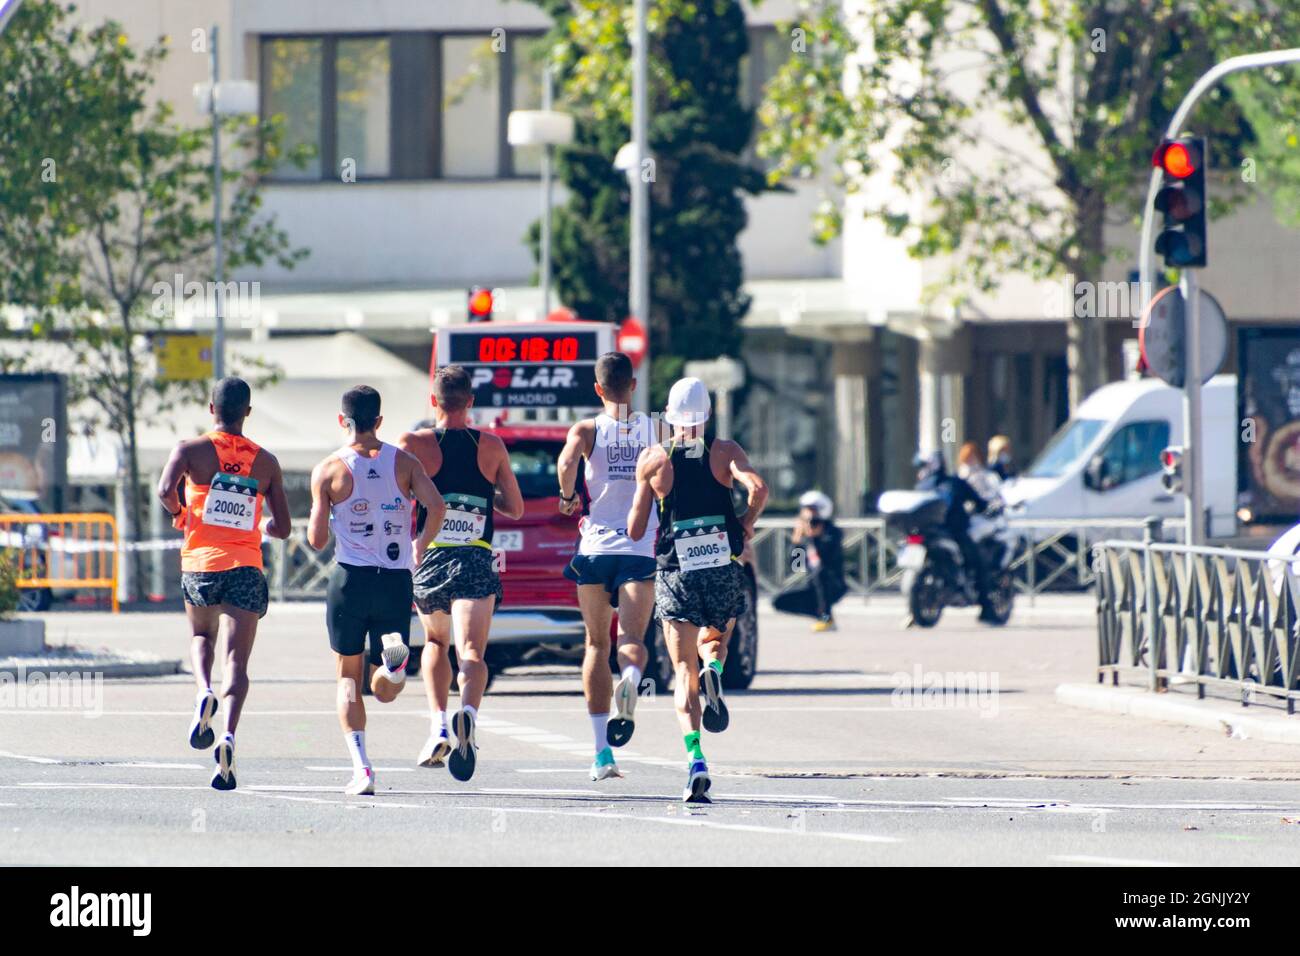 Group of professional athletes walking the streets of Madrid doing the Madrid Half Marathon. Chema Martinez. In Spain. Europe. Horizontal photography. Stock Photo